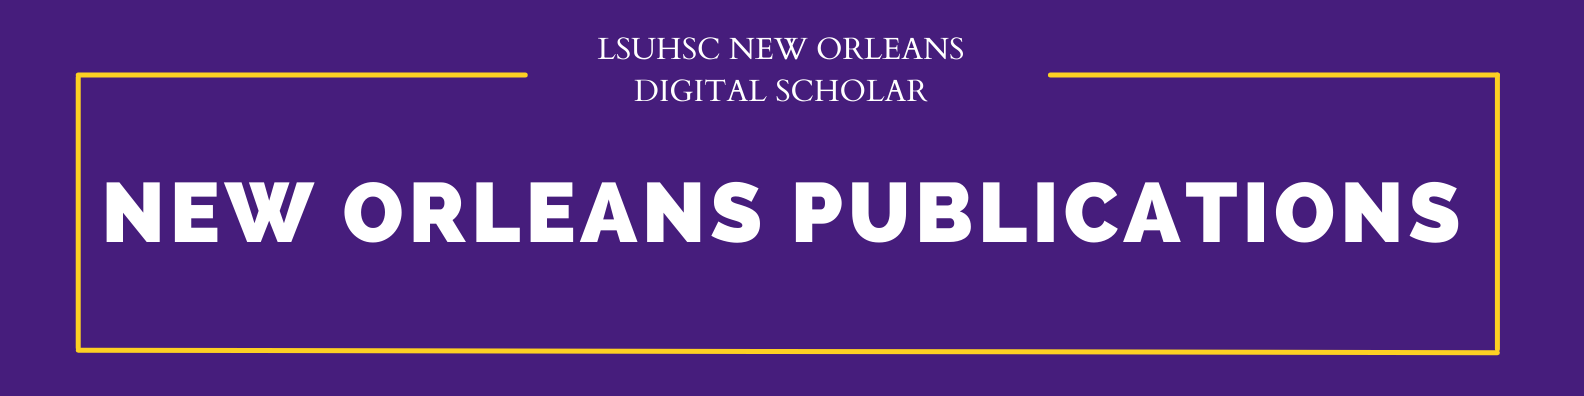 LSU Health Sciences Center- New Orleans Publications